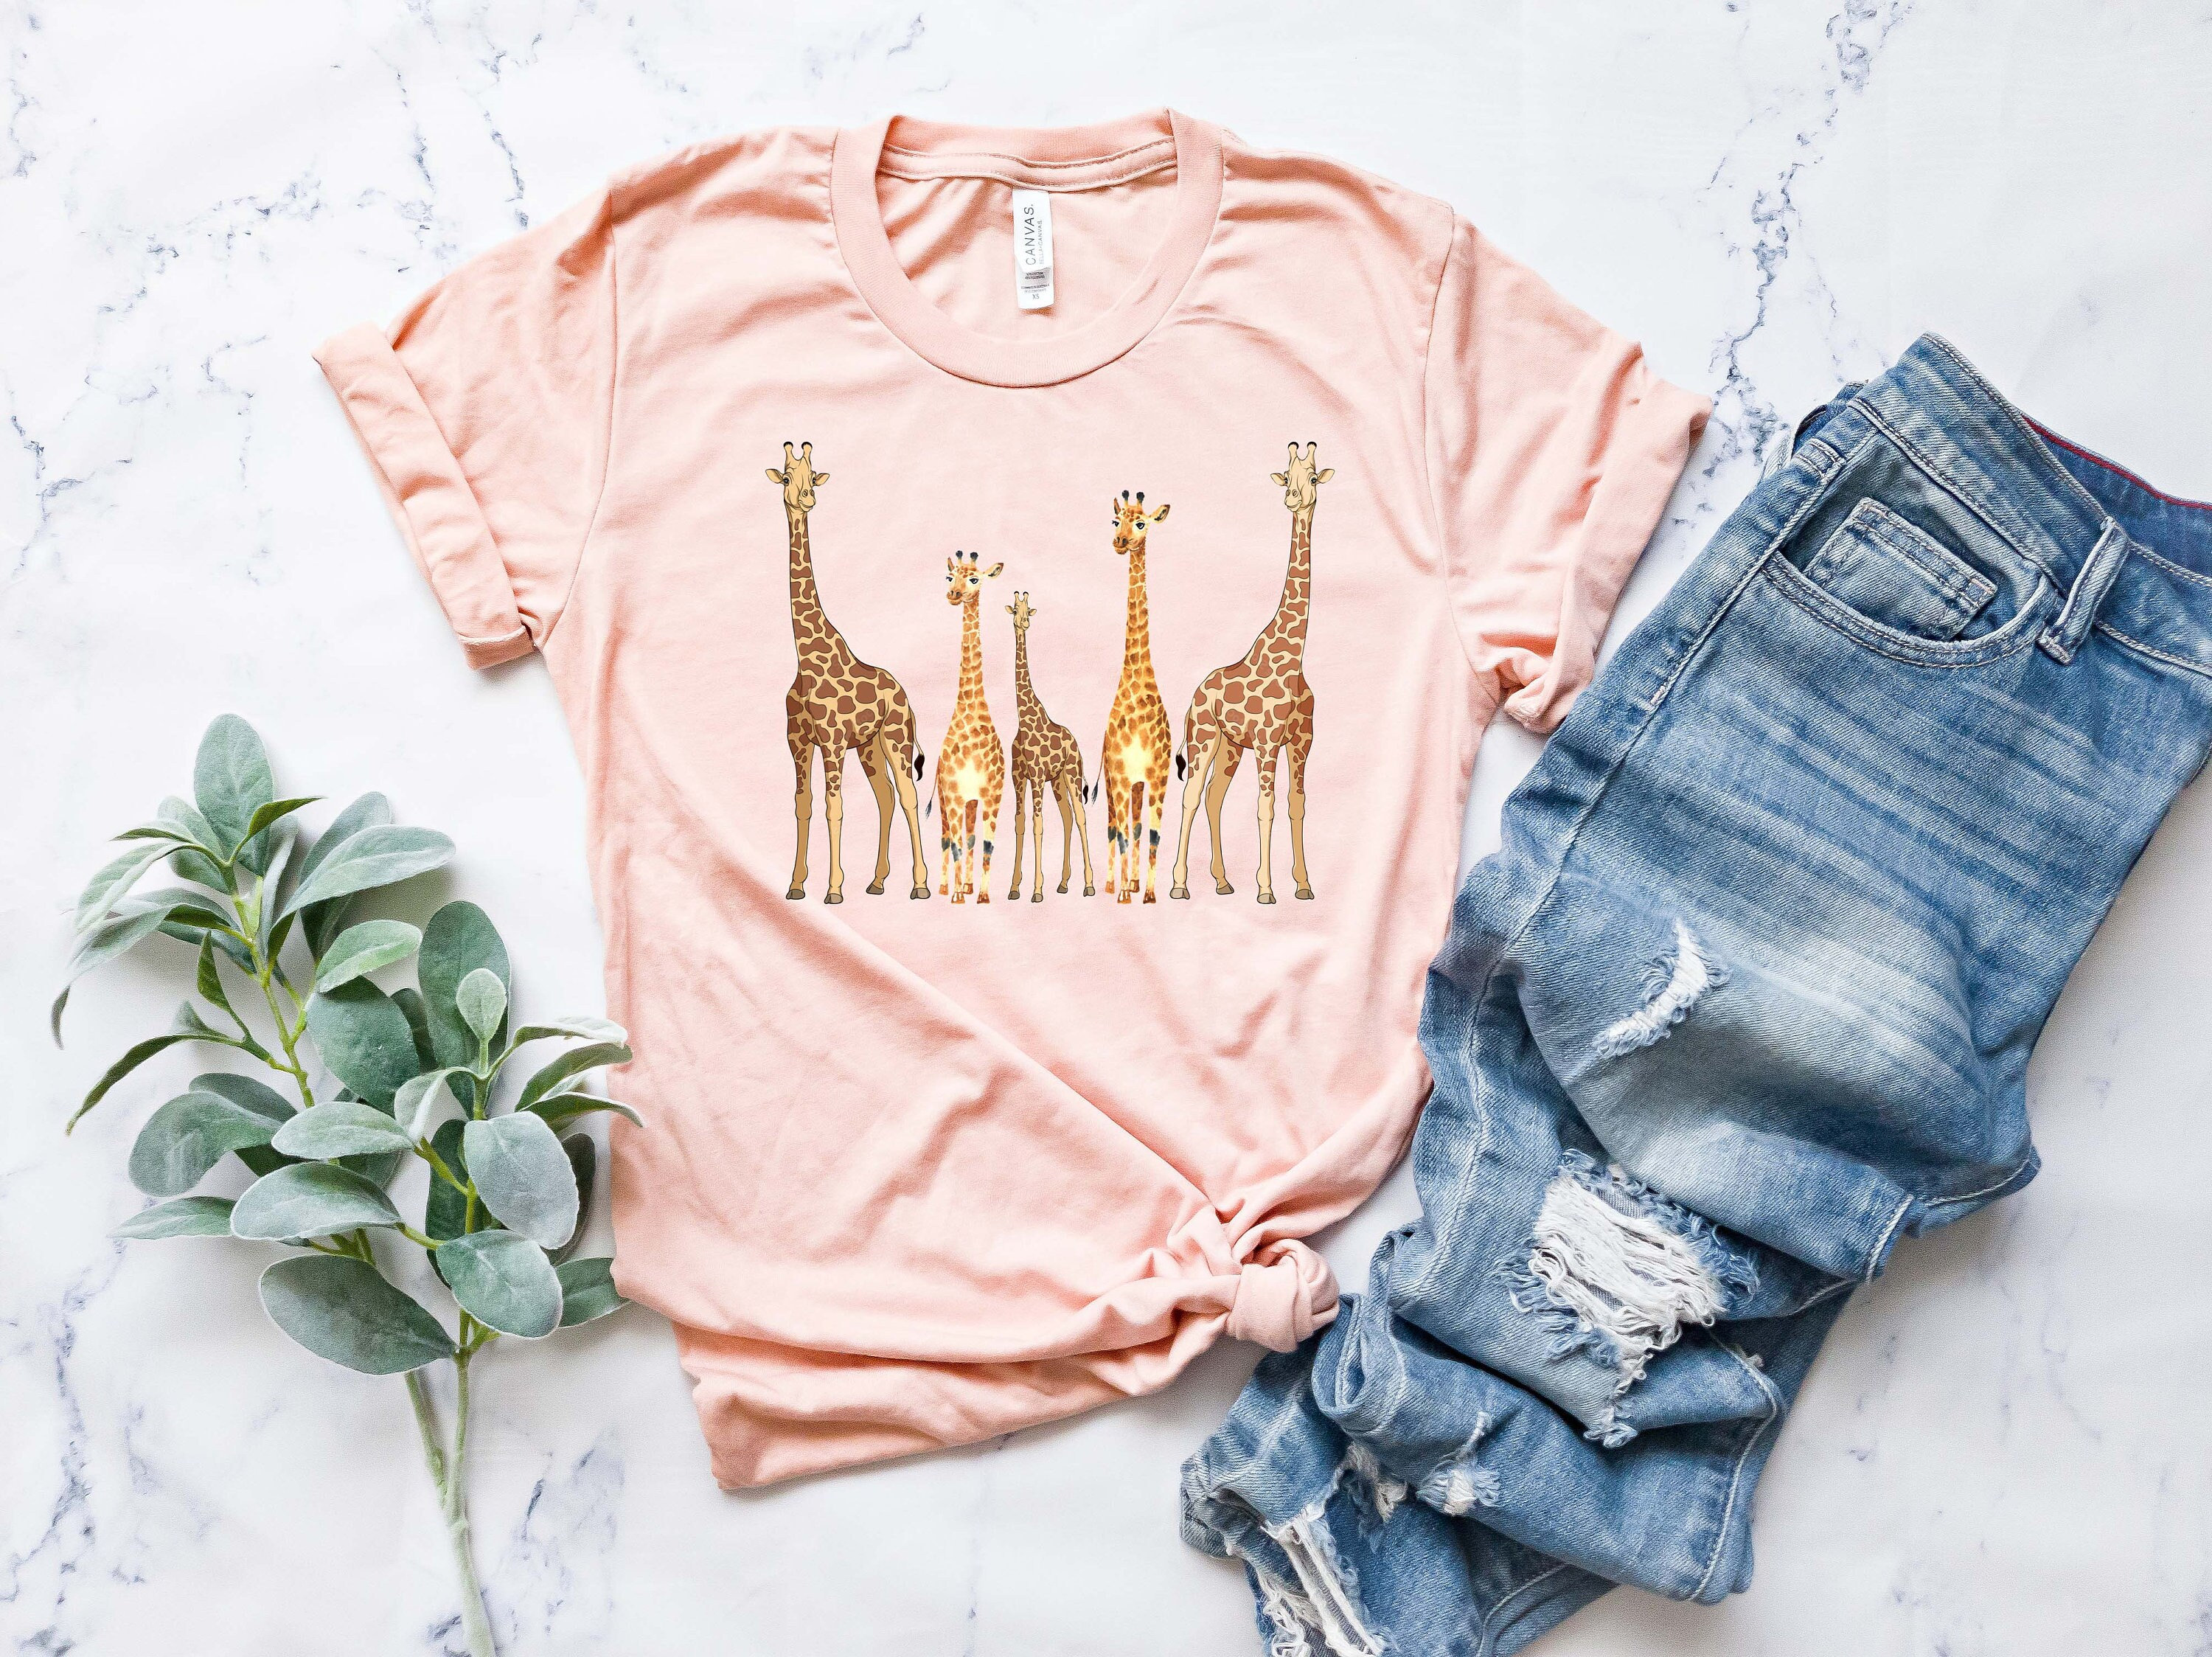 Giraffe Shirt Lovers Gifts Funny Saying